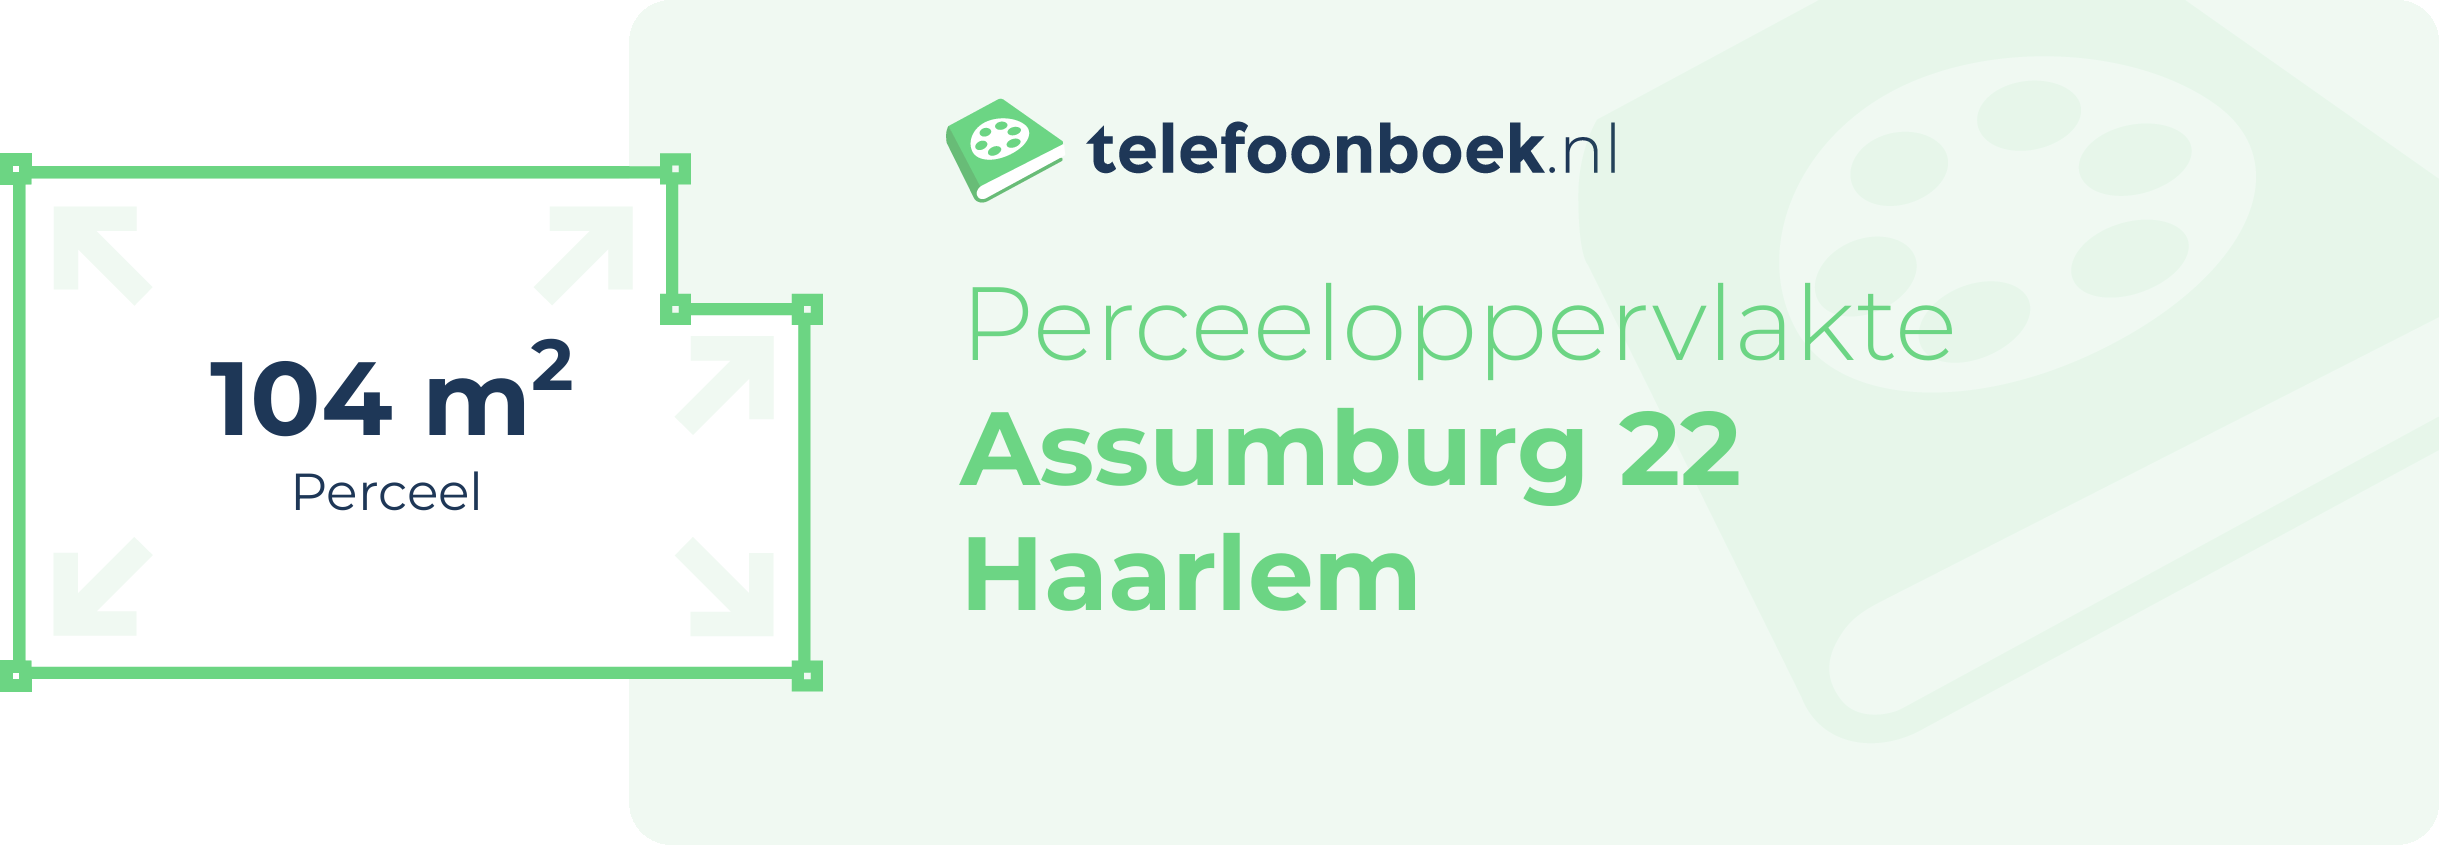 Perceeloppervlakte Assumburg 22 Haarlem